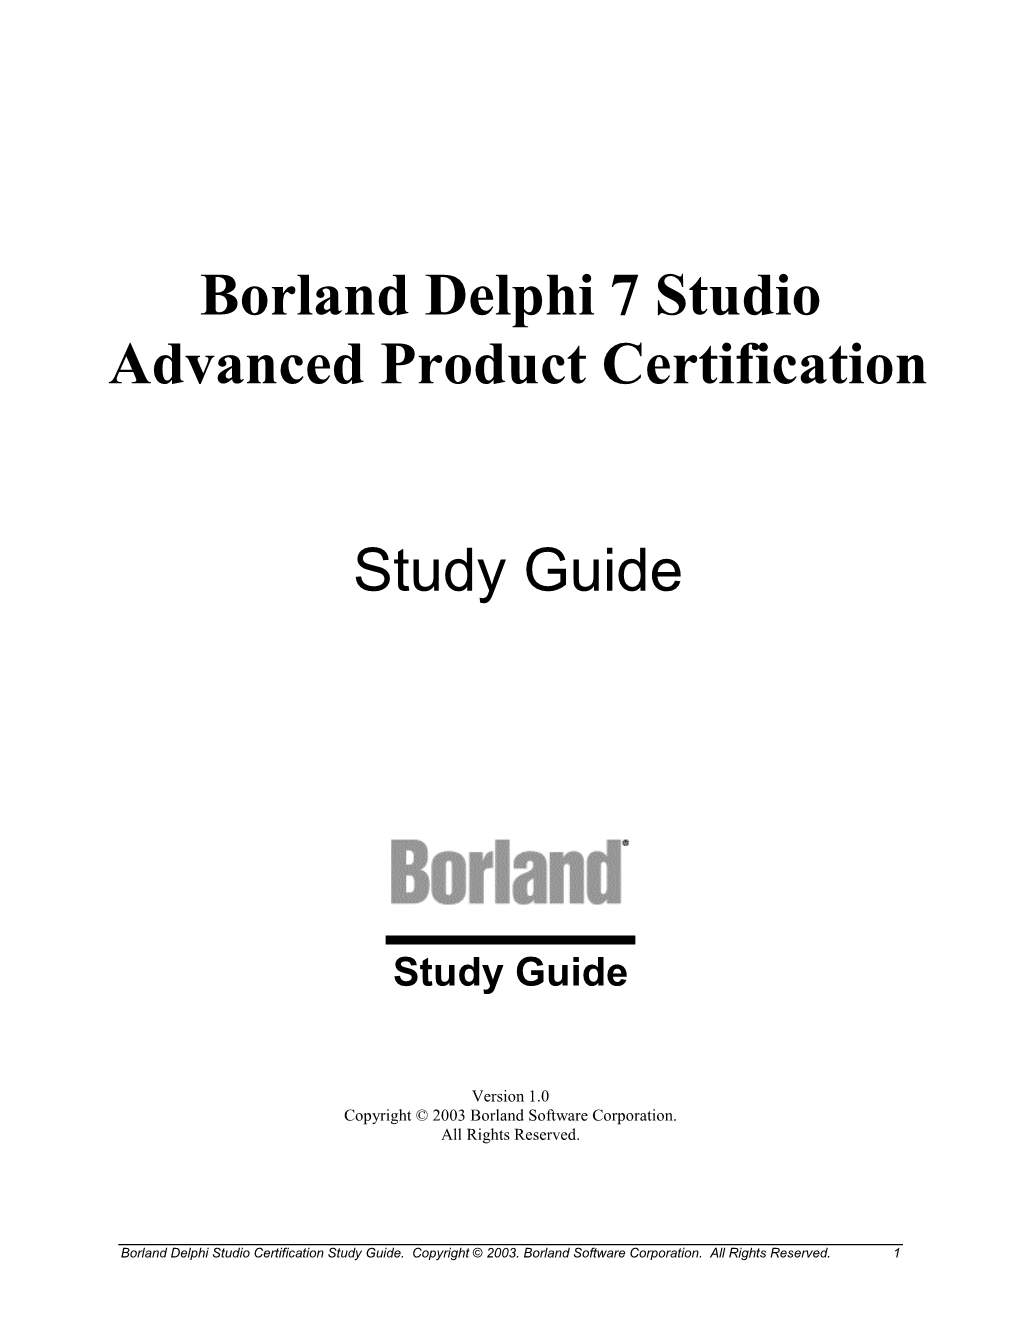 Borland Delphi 7 Studio Advanced Product Certification Study Guide